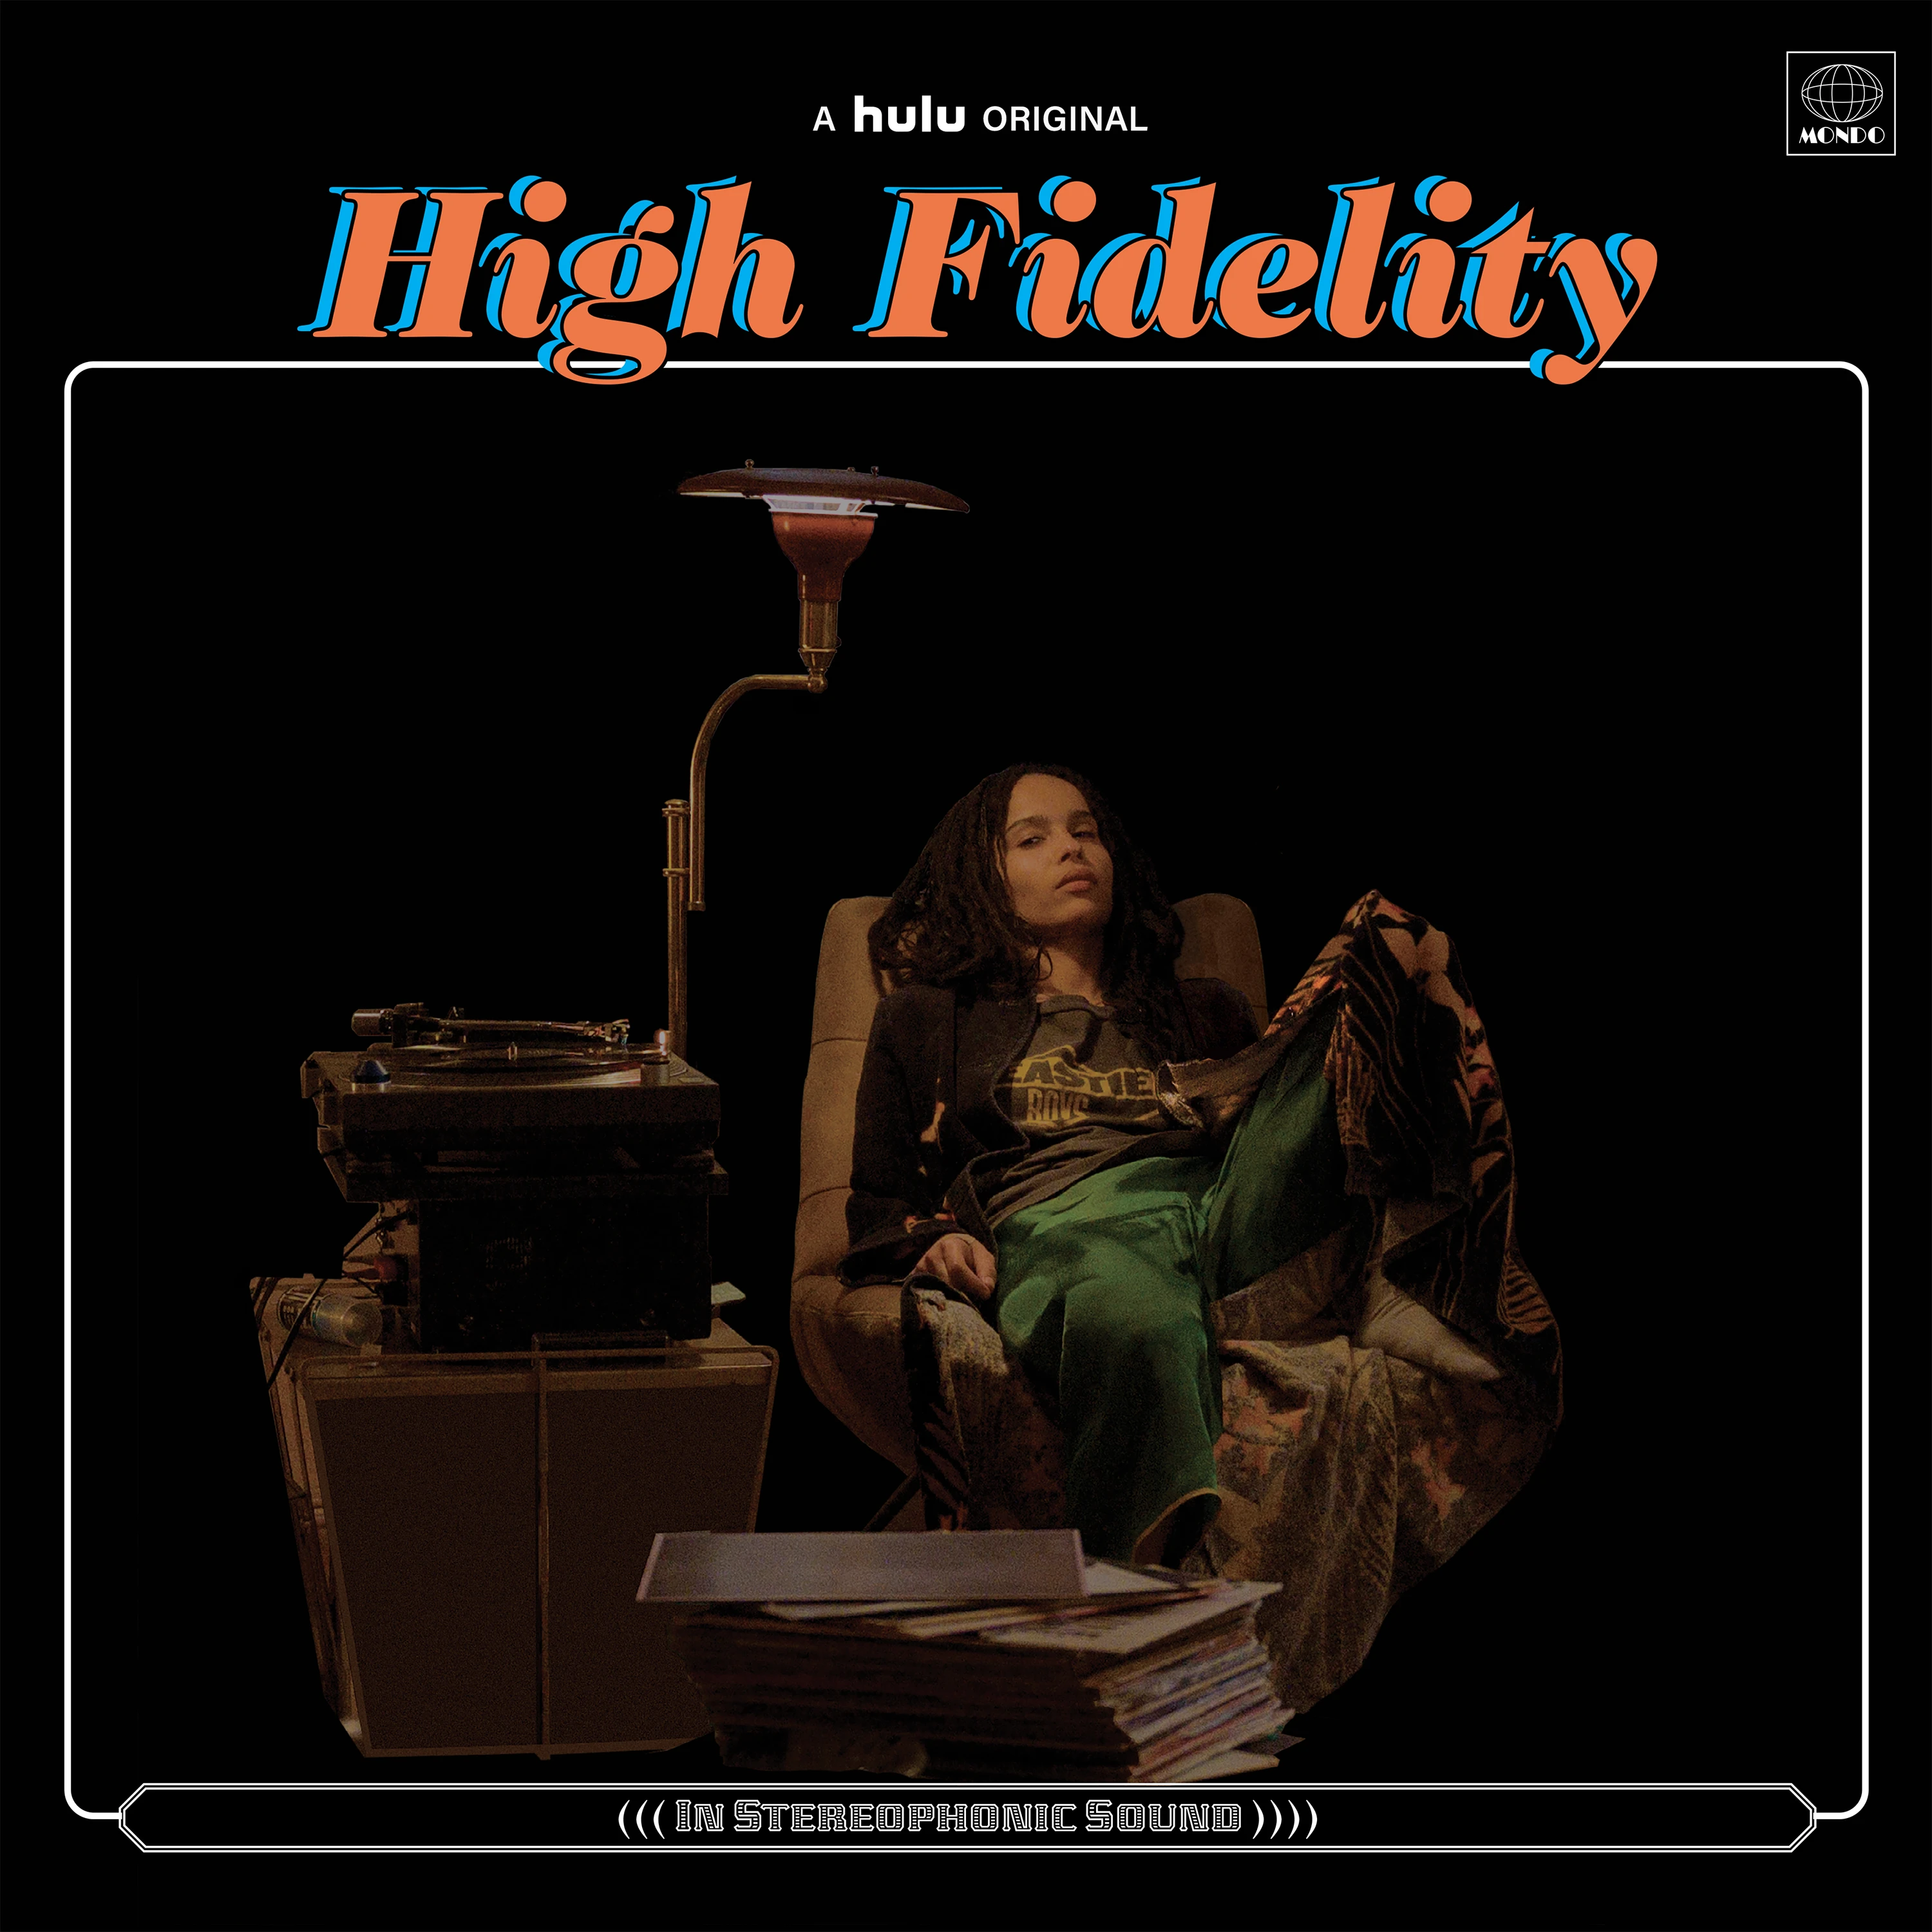 High Fidelity soundtrack album cover